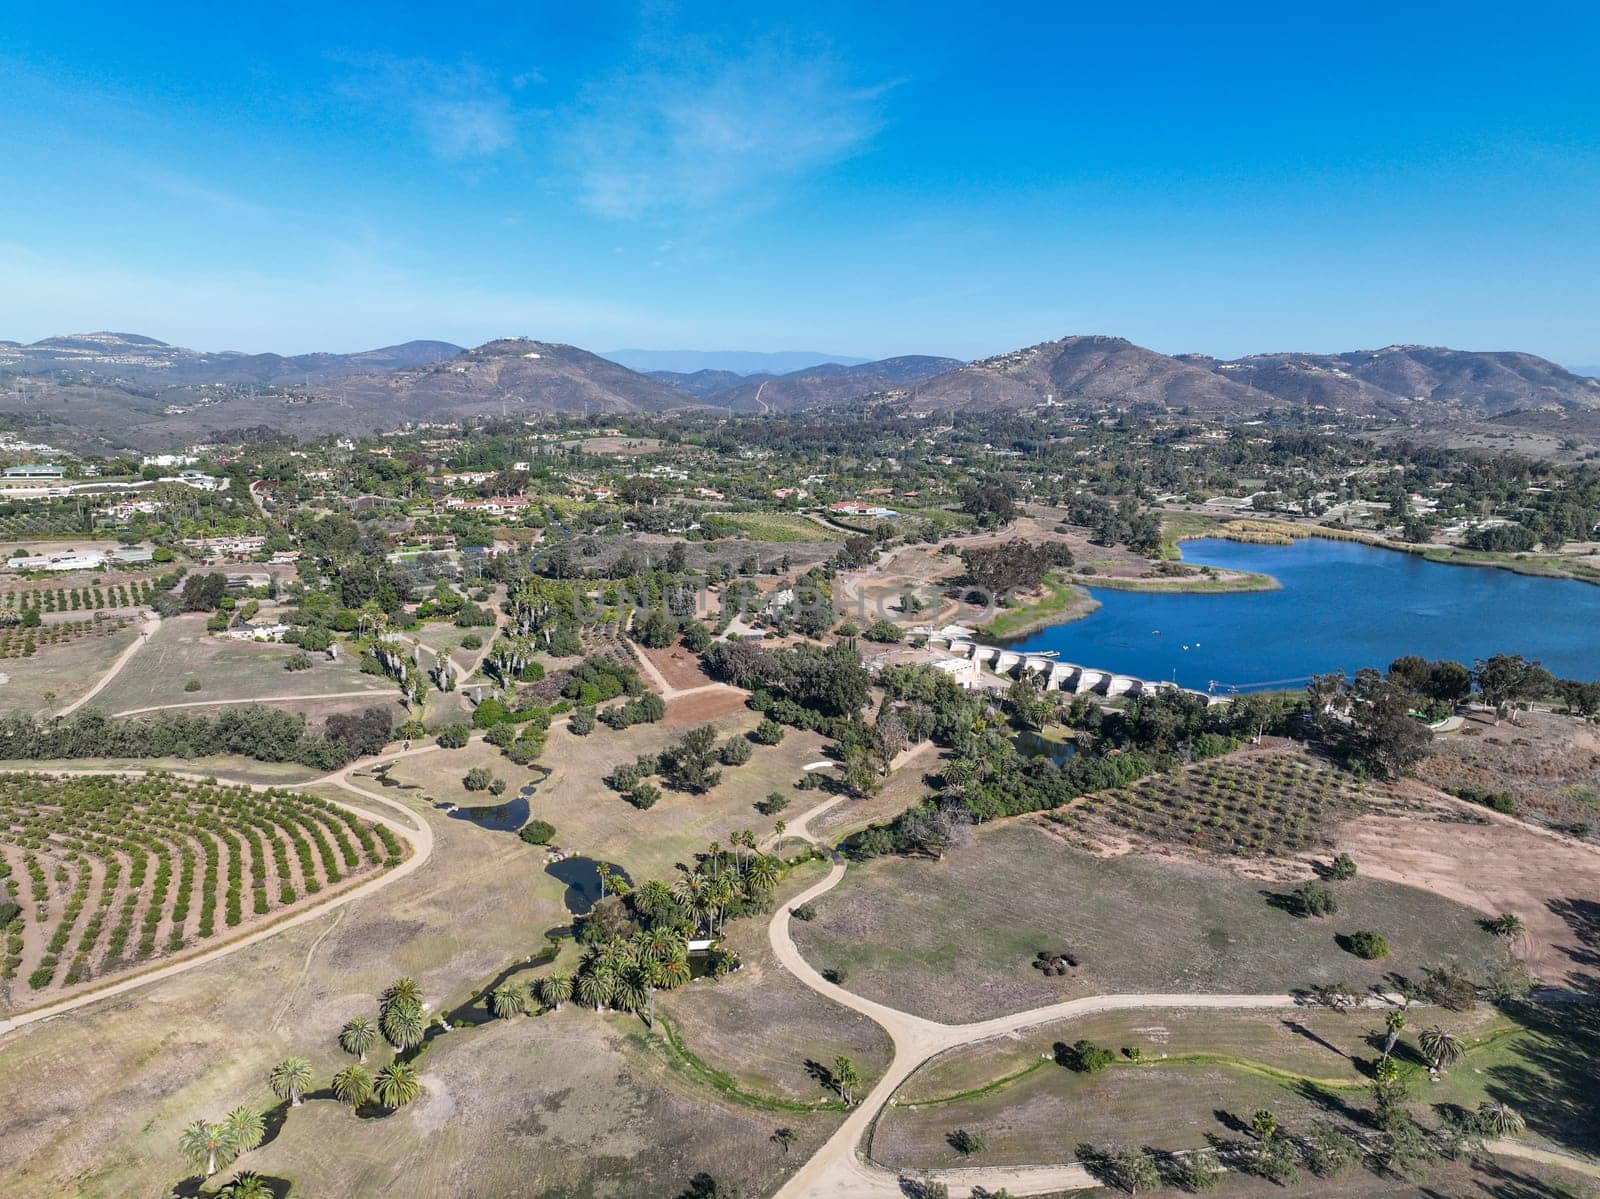 Aerial view over Rancho Santa Fe green valley landscape in San Diego by Bonandbon